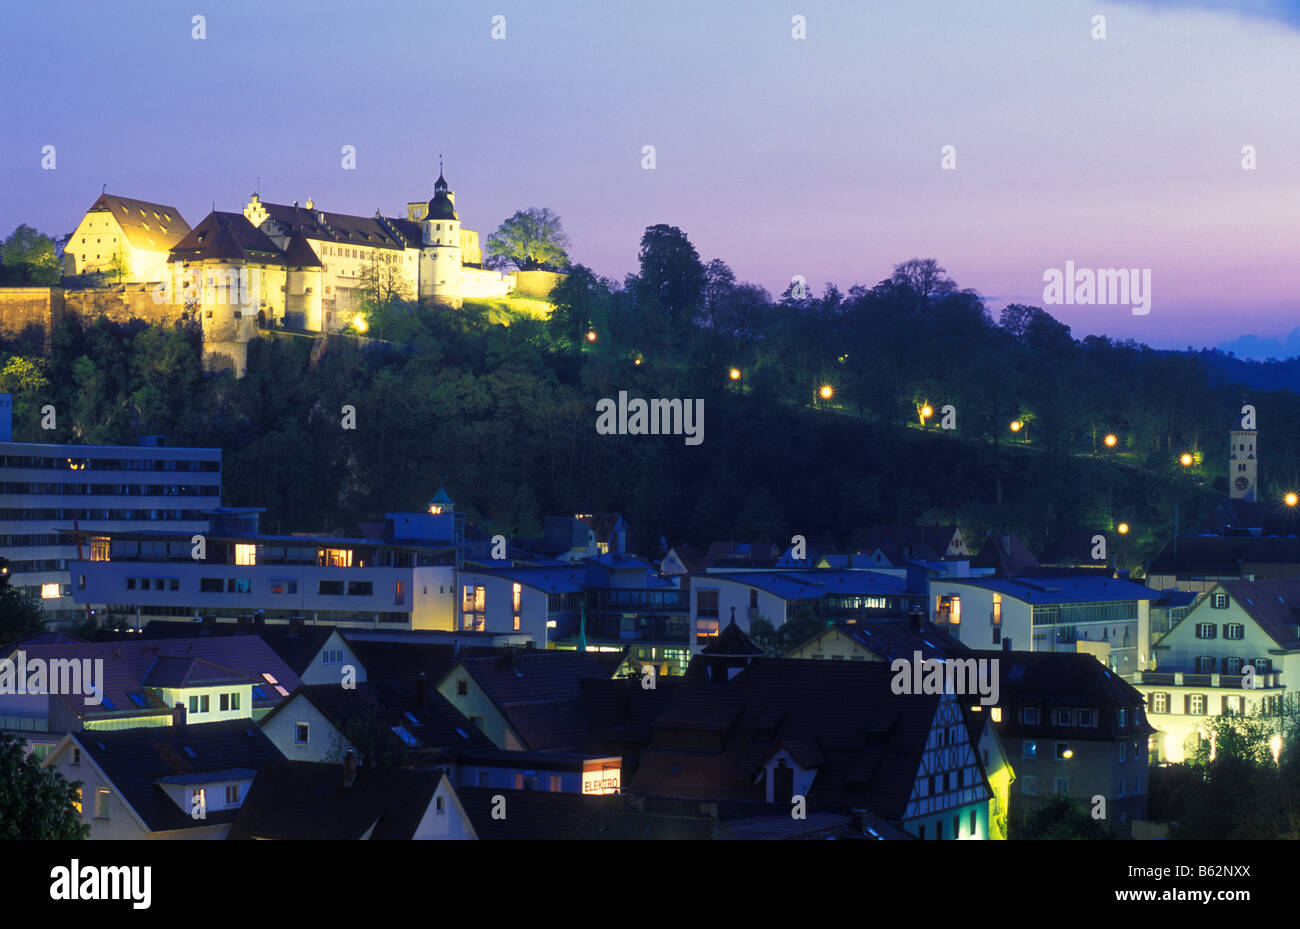 Hellenstein castle heidenheim hi-res stock photography and images - Alamy